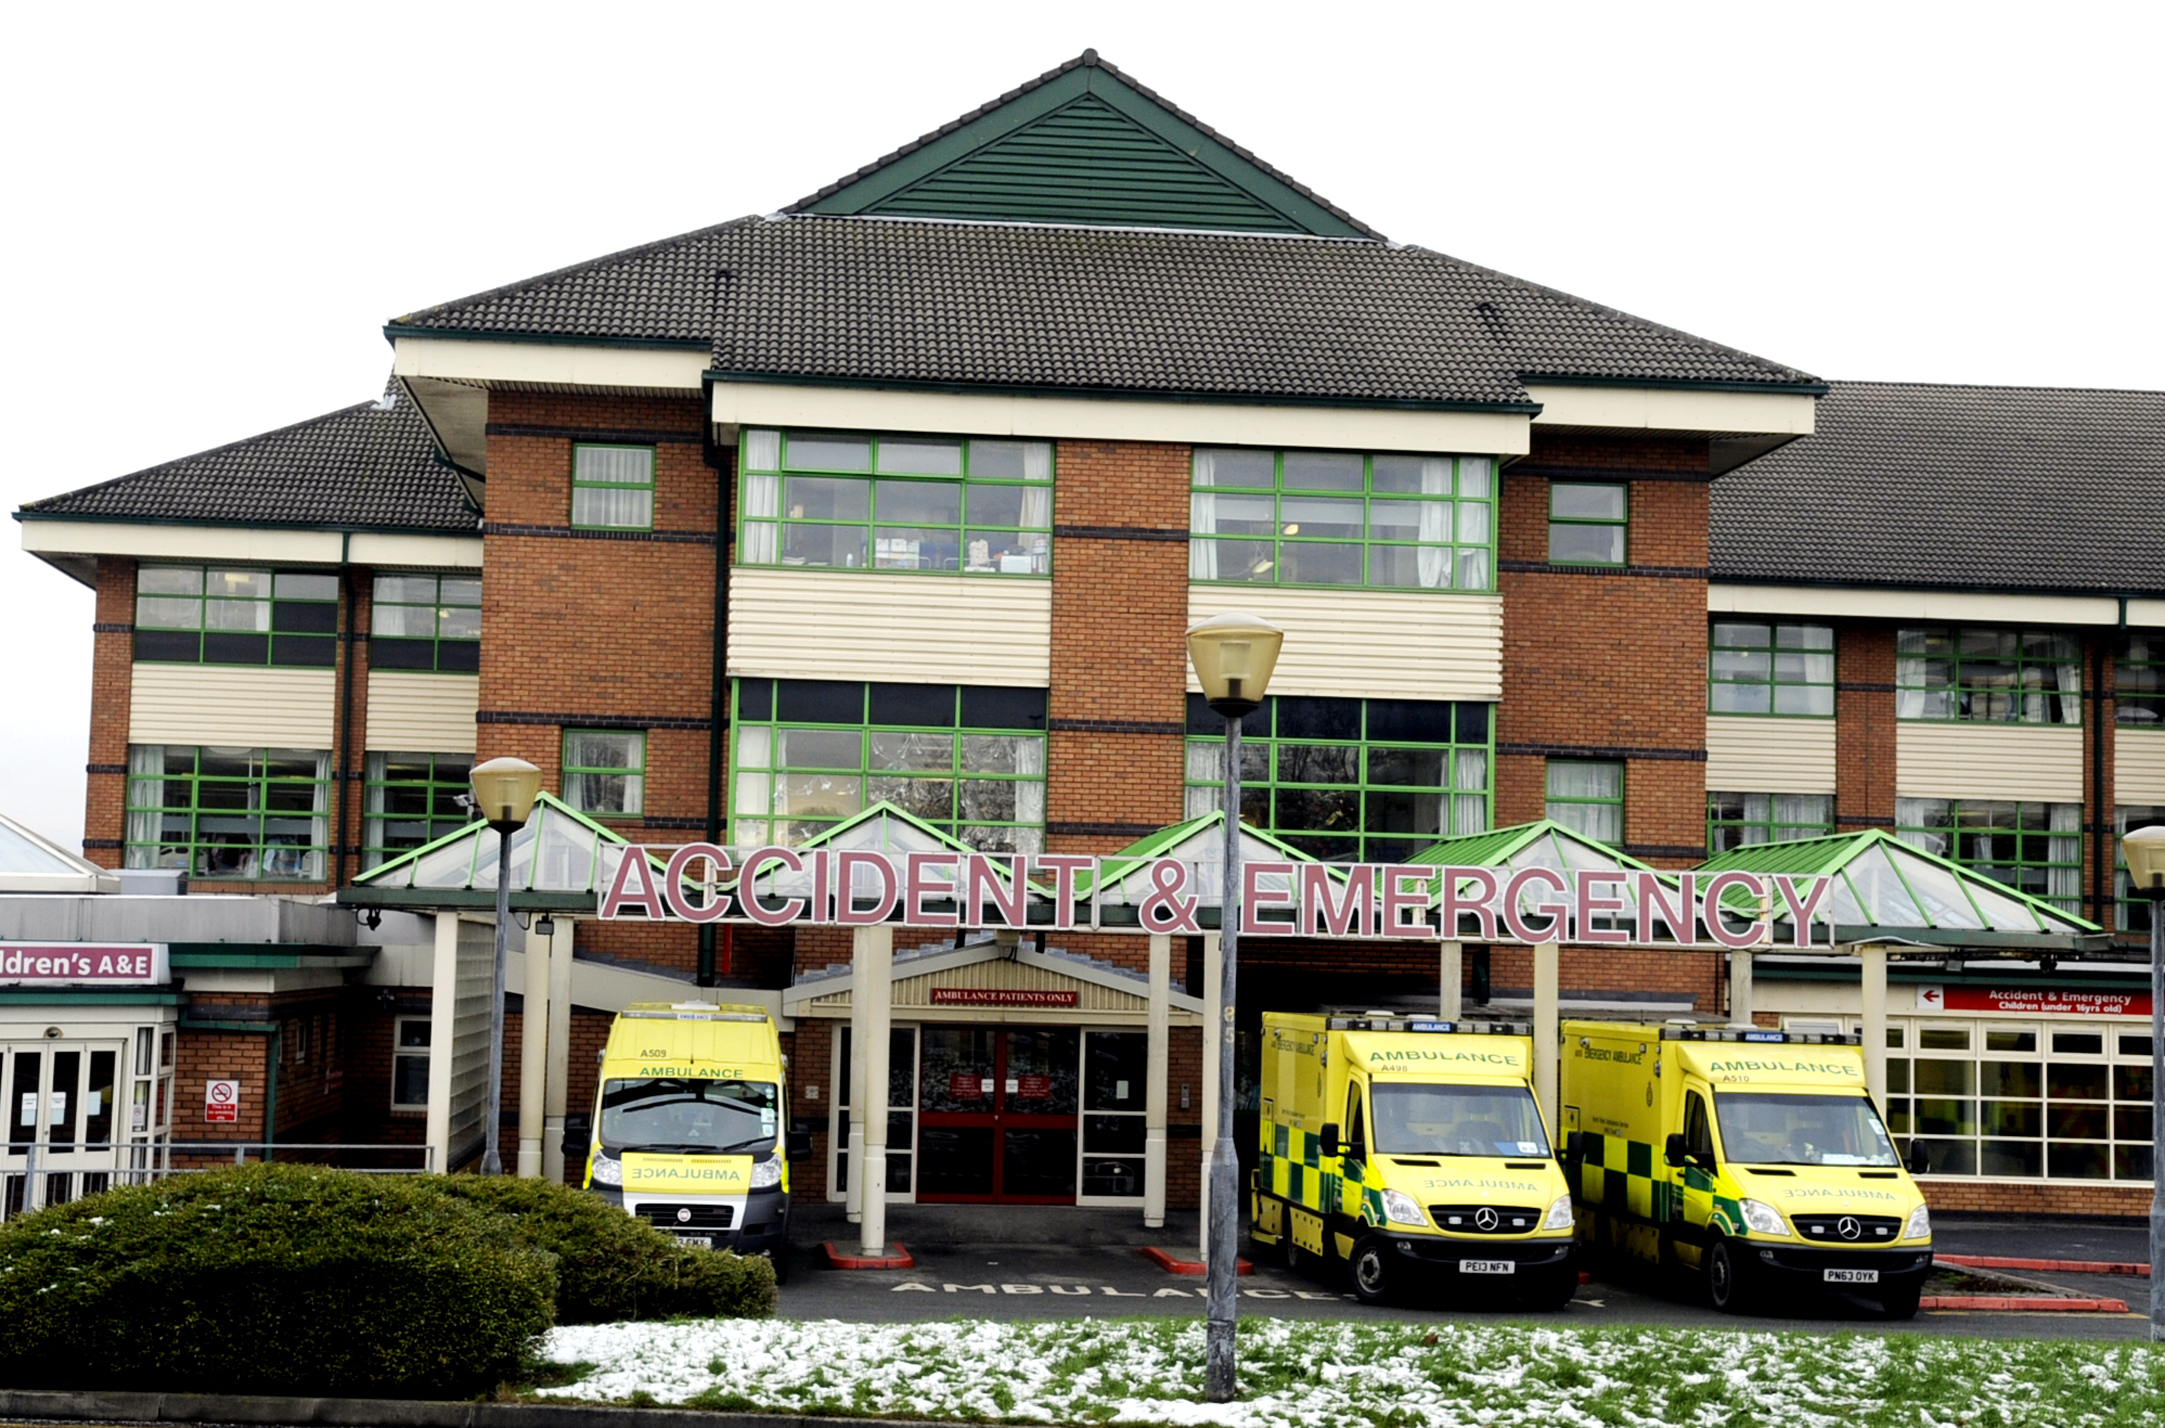 'Still challenging' - Warning of further pressure on emergency services despite respite